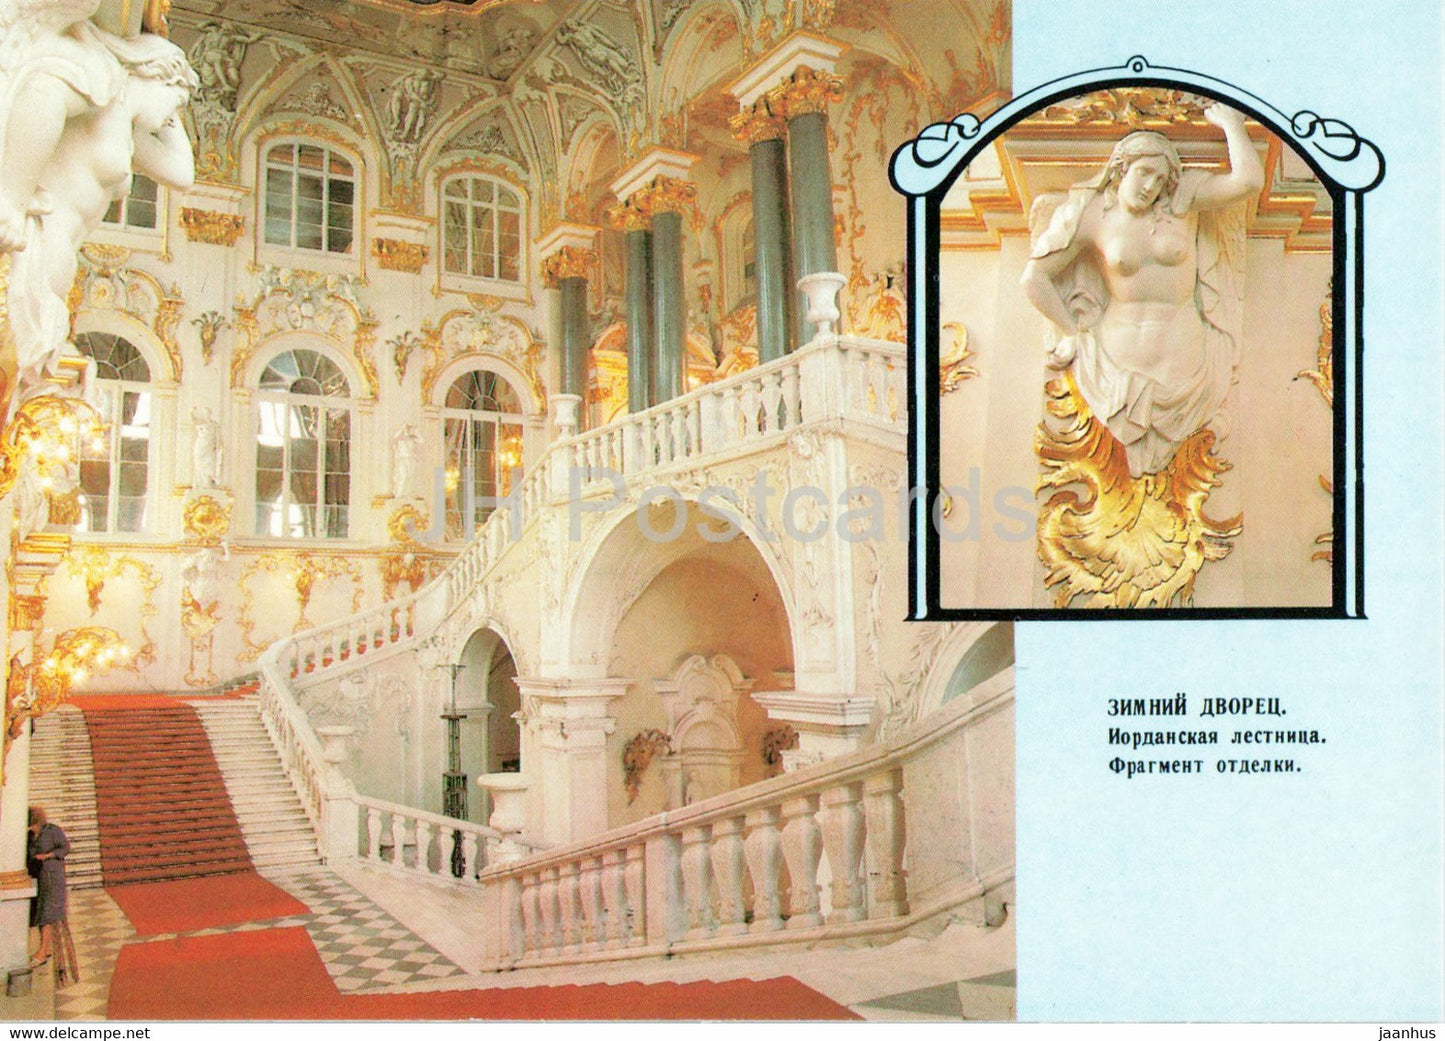 Leningrad - St Petersburg - State Hermitage - Jordan Staircase - postal stationery - 1989 - Russia USSR - unused - JH Postcards